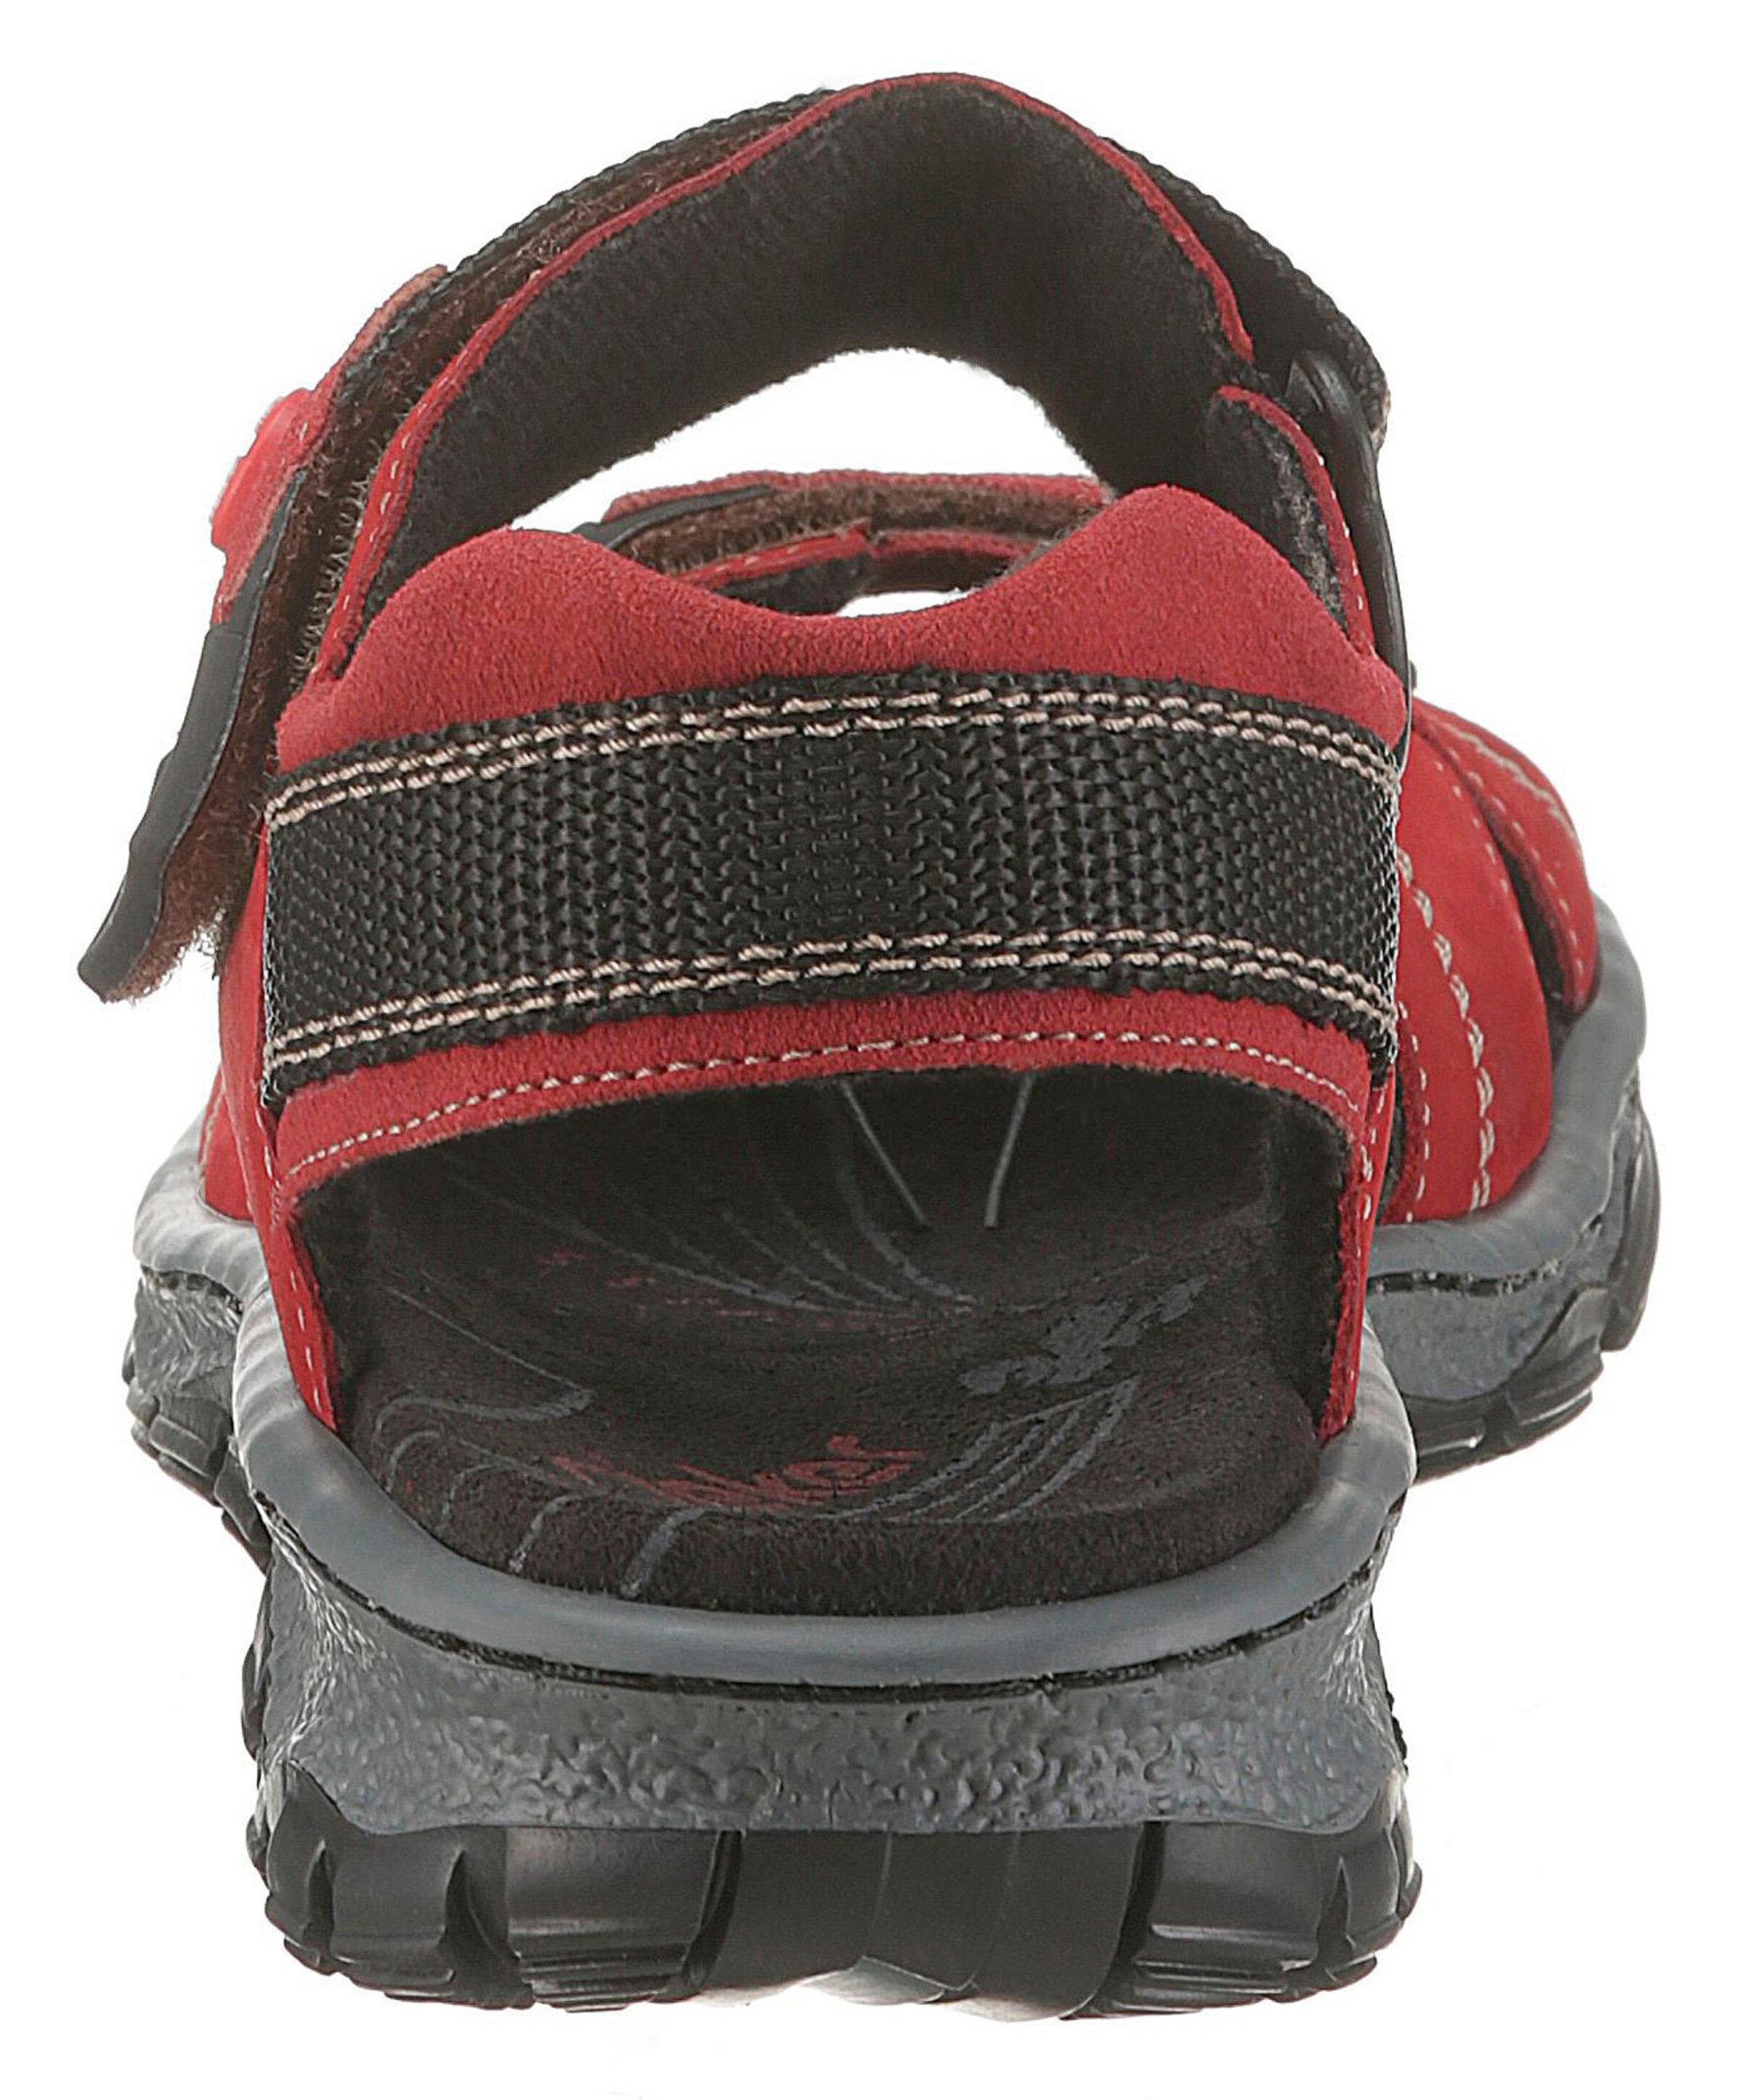 Schuhe Sandaletten Rieker Outdoorsandale in rot 